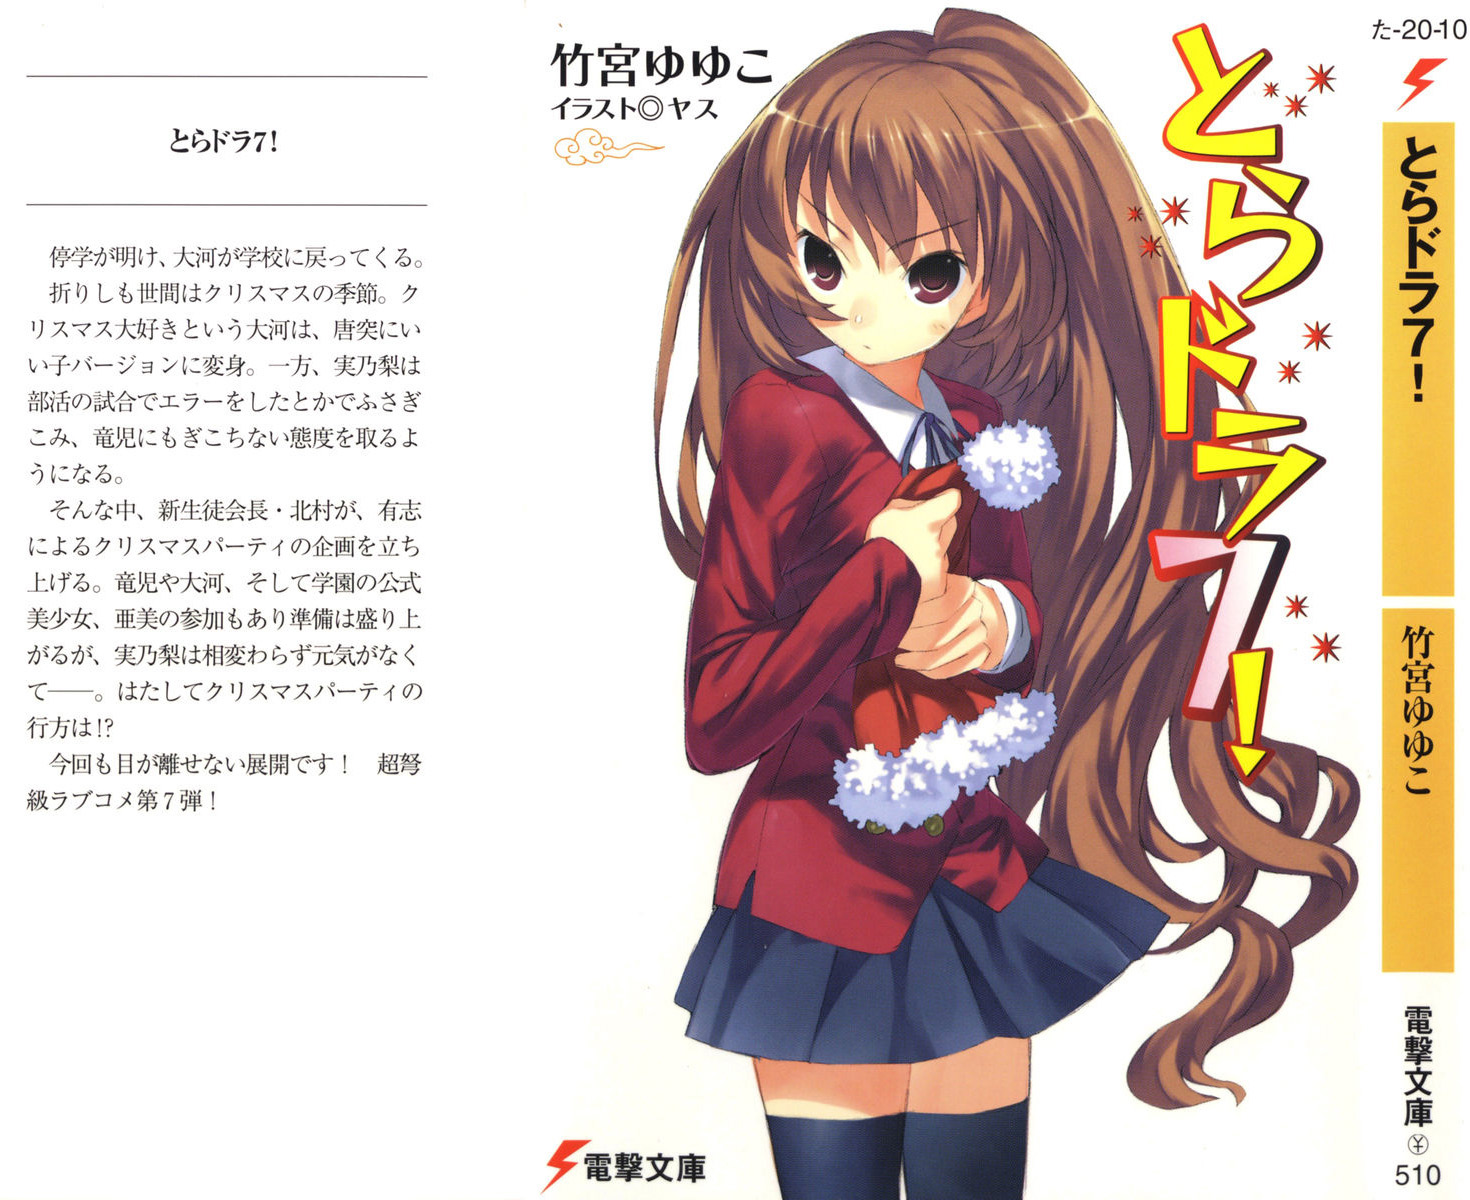 Toradora Tập 7 Sonako Light Novel Wiki Fandom Powered